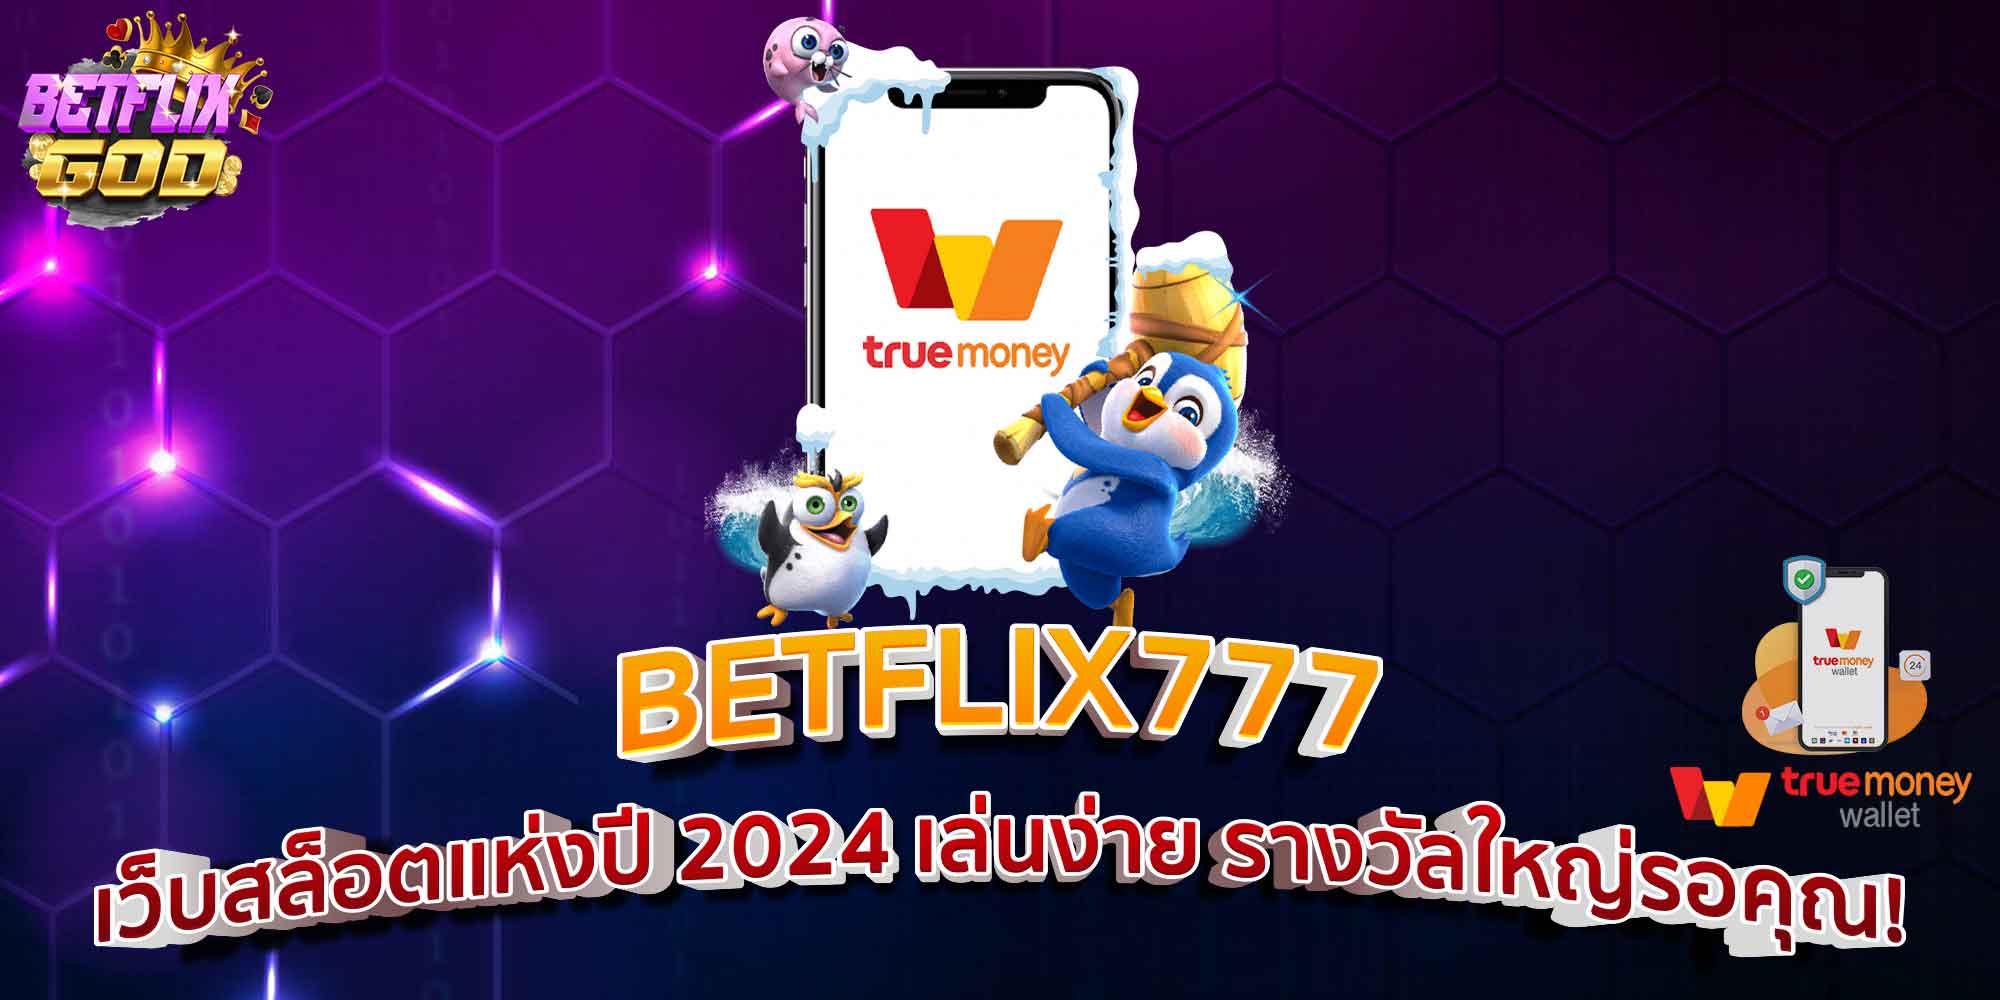 BETFLIX777 เว็บสล็อตแห่งปี 2024 เล่นง่าย รางวัลใหญ่รอคุณ!